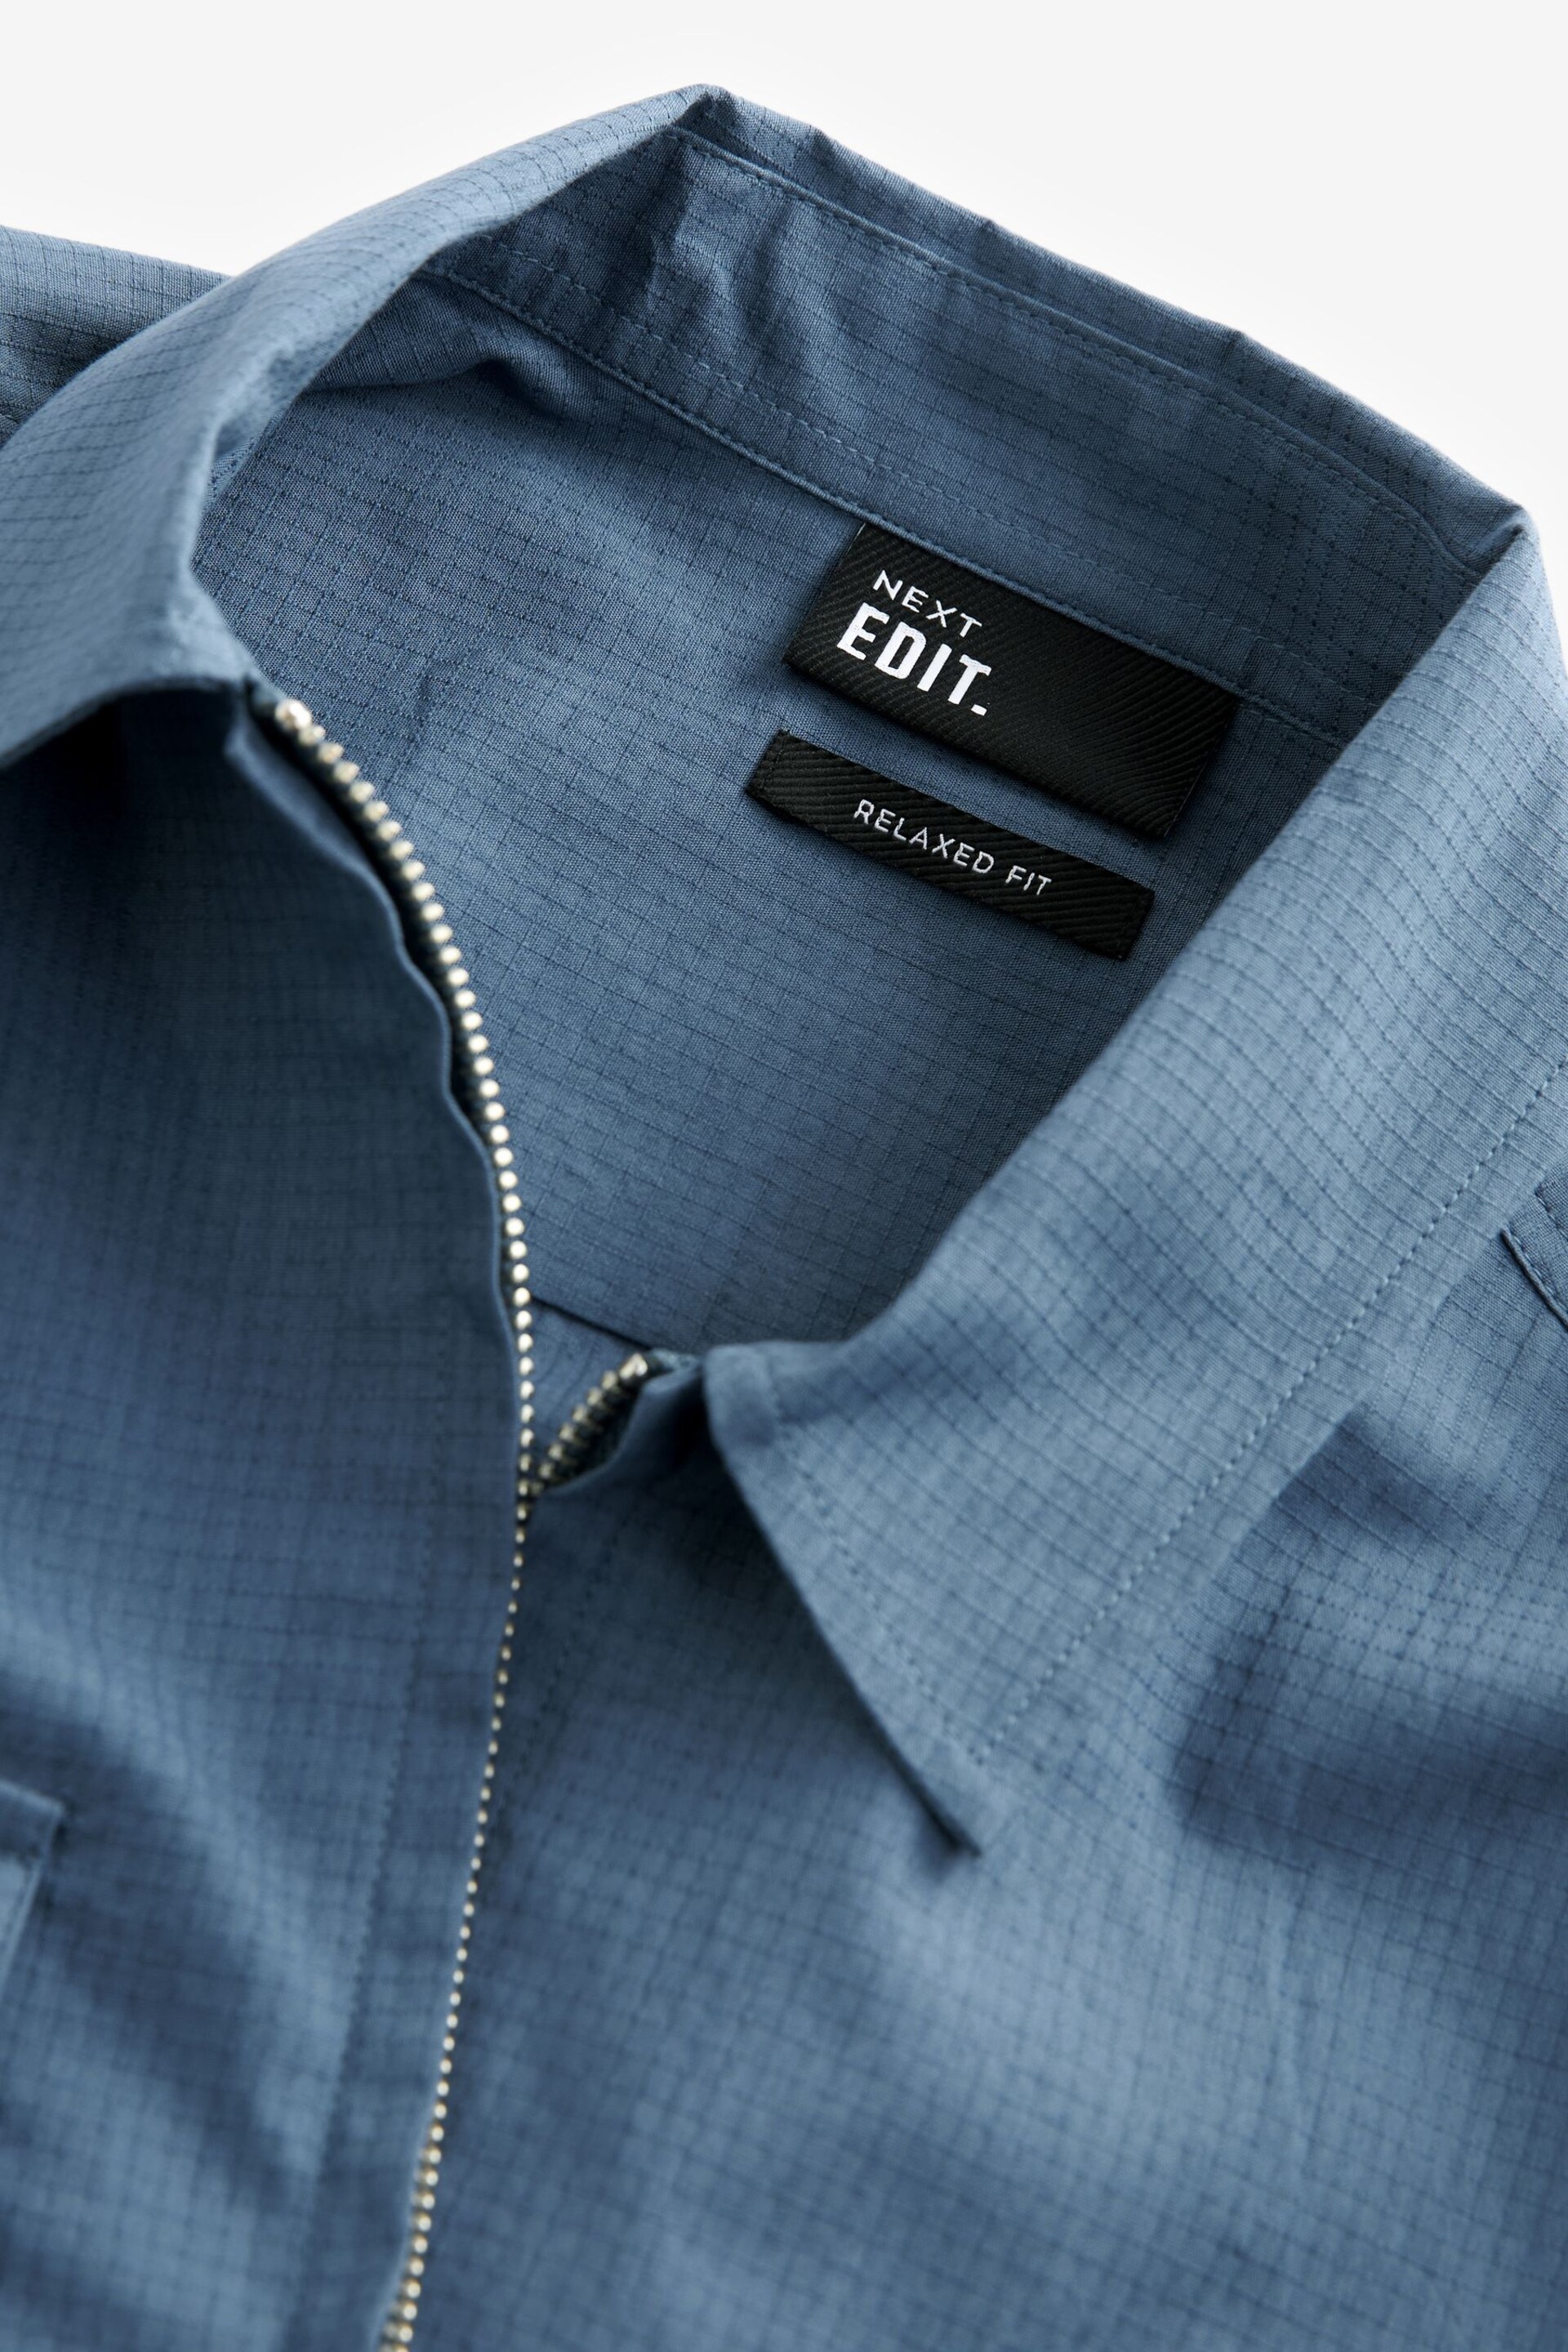 Navy Blue EDIT Zip Through Shacket Overshirt - Image 7 of 10